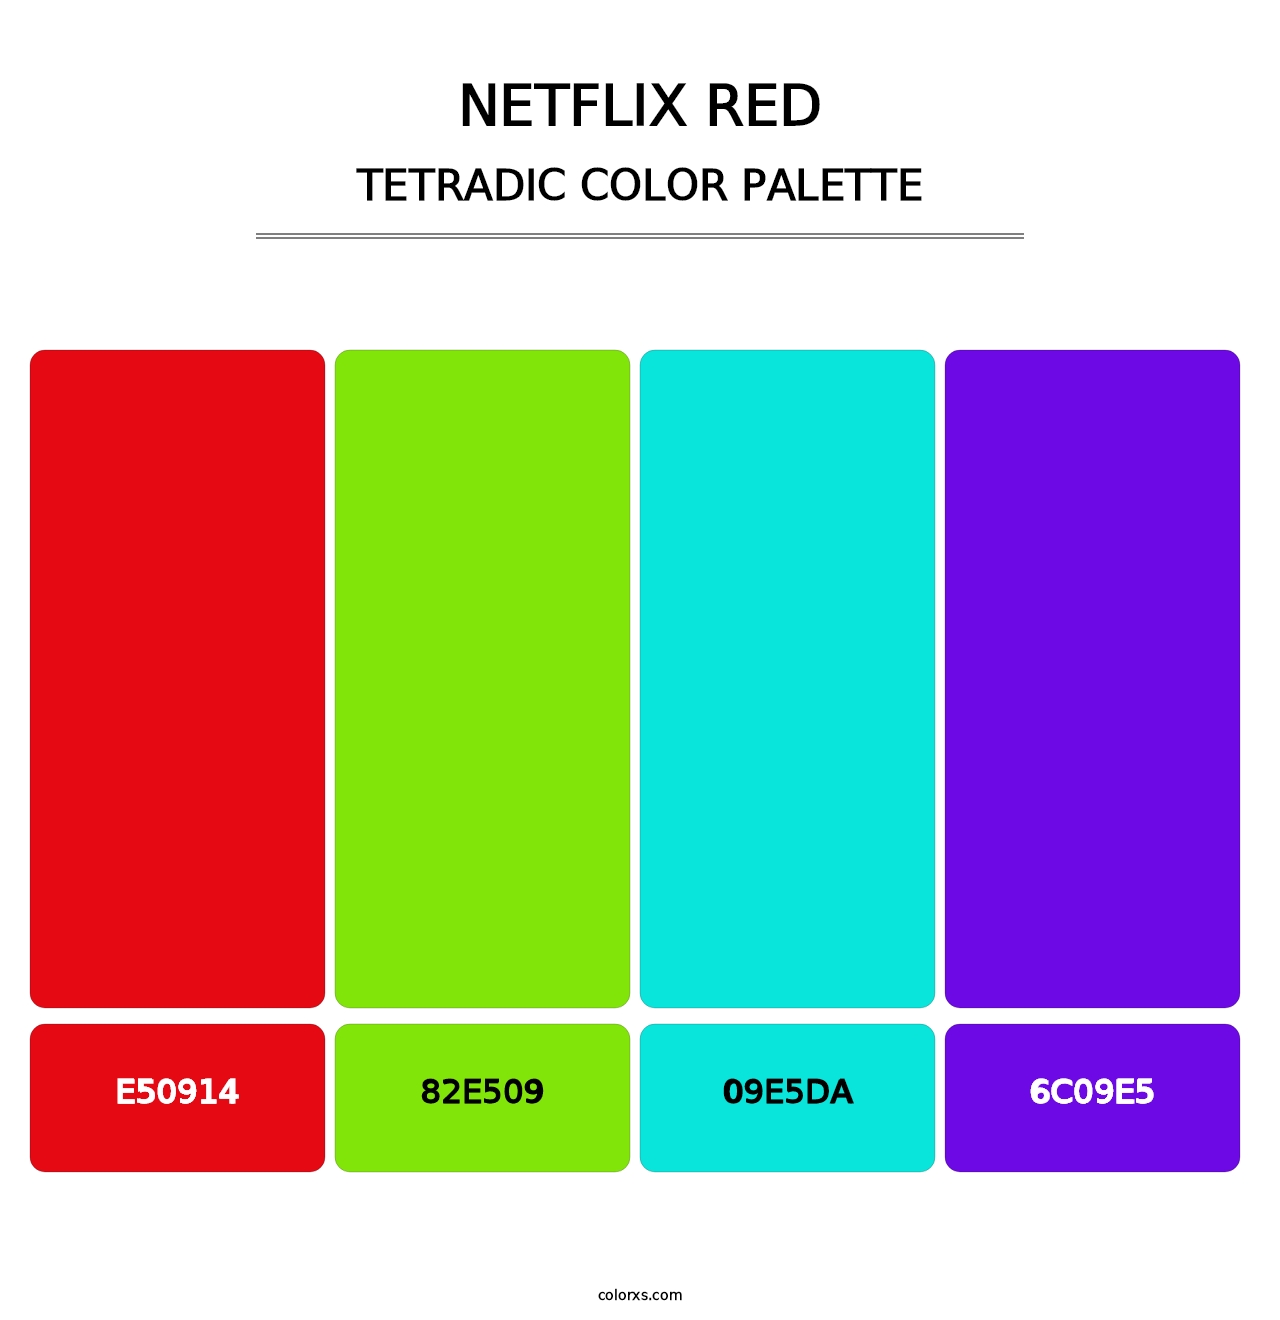 Netflix Red - Tetradic Color Palette